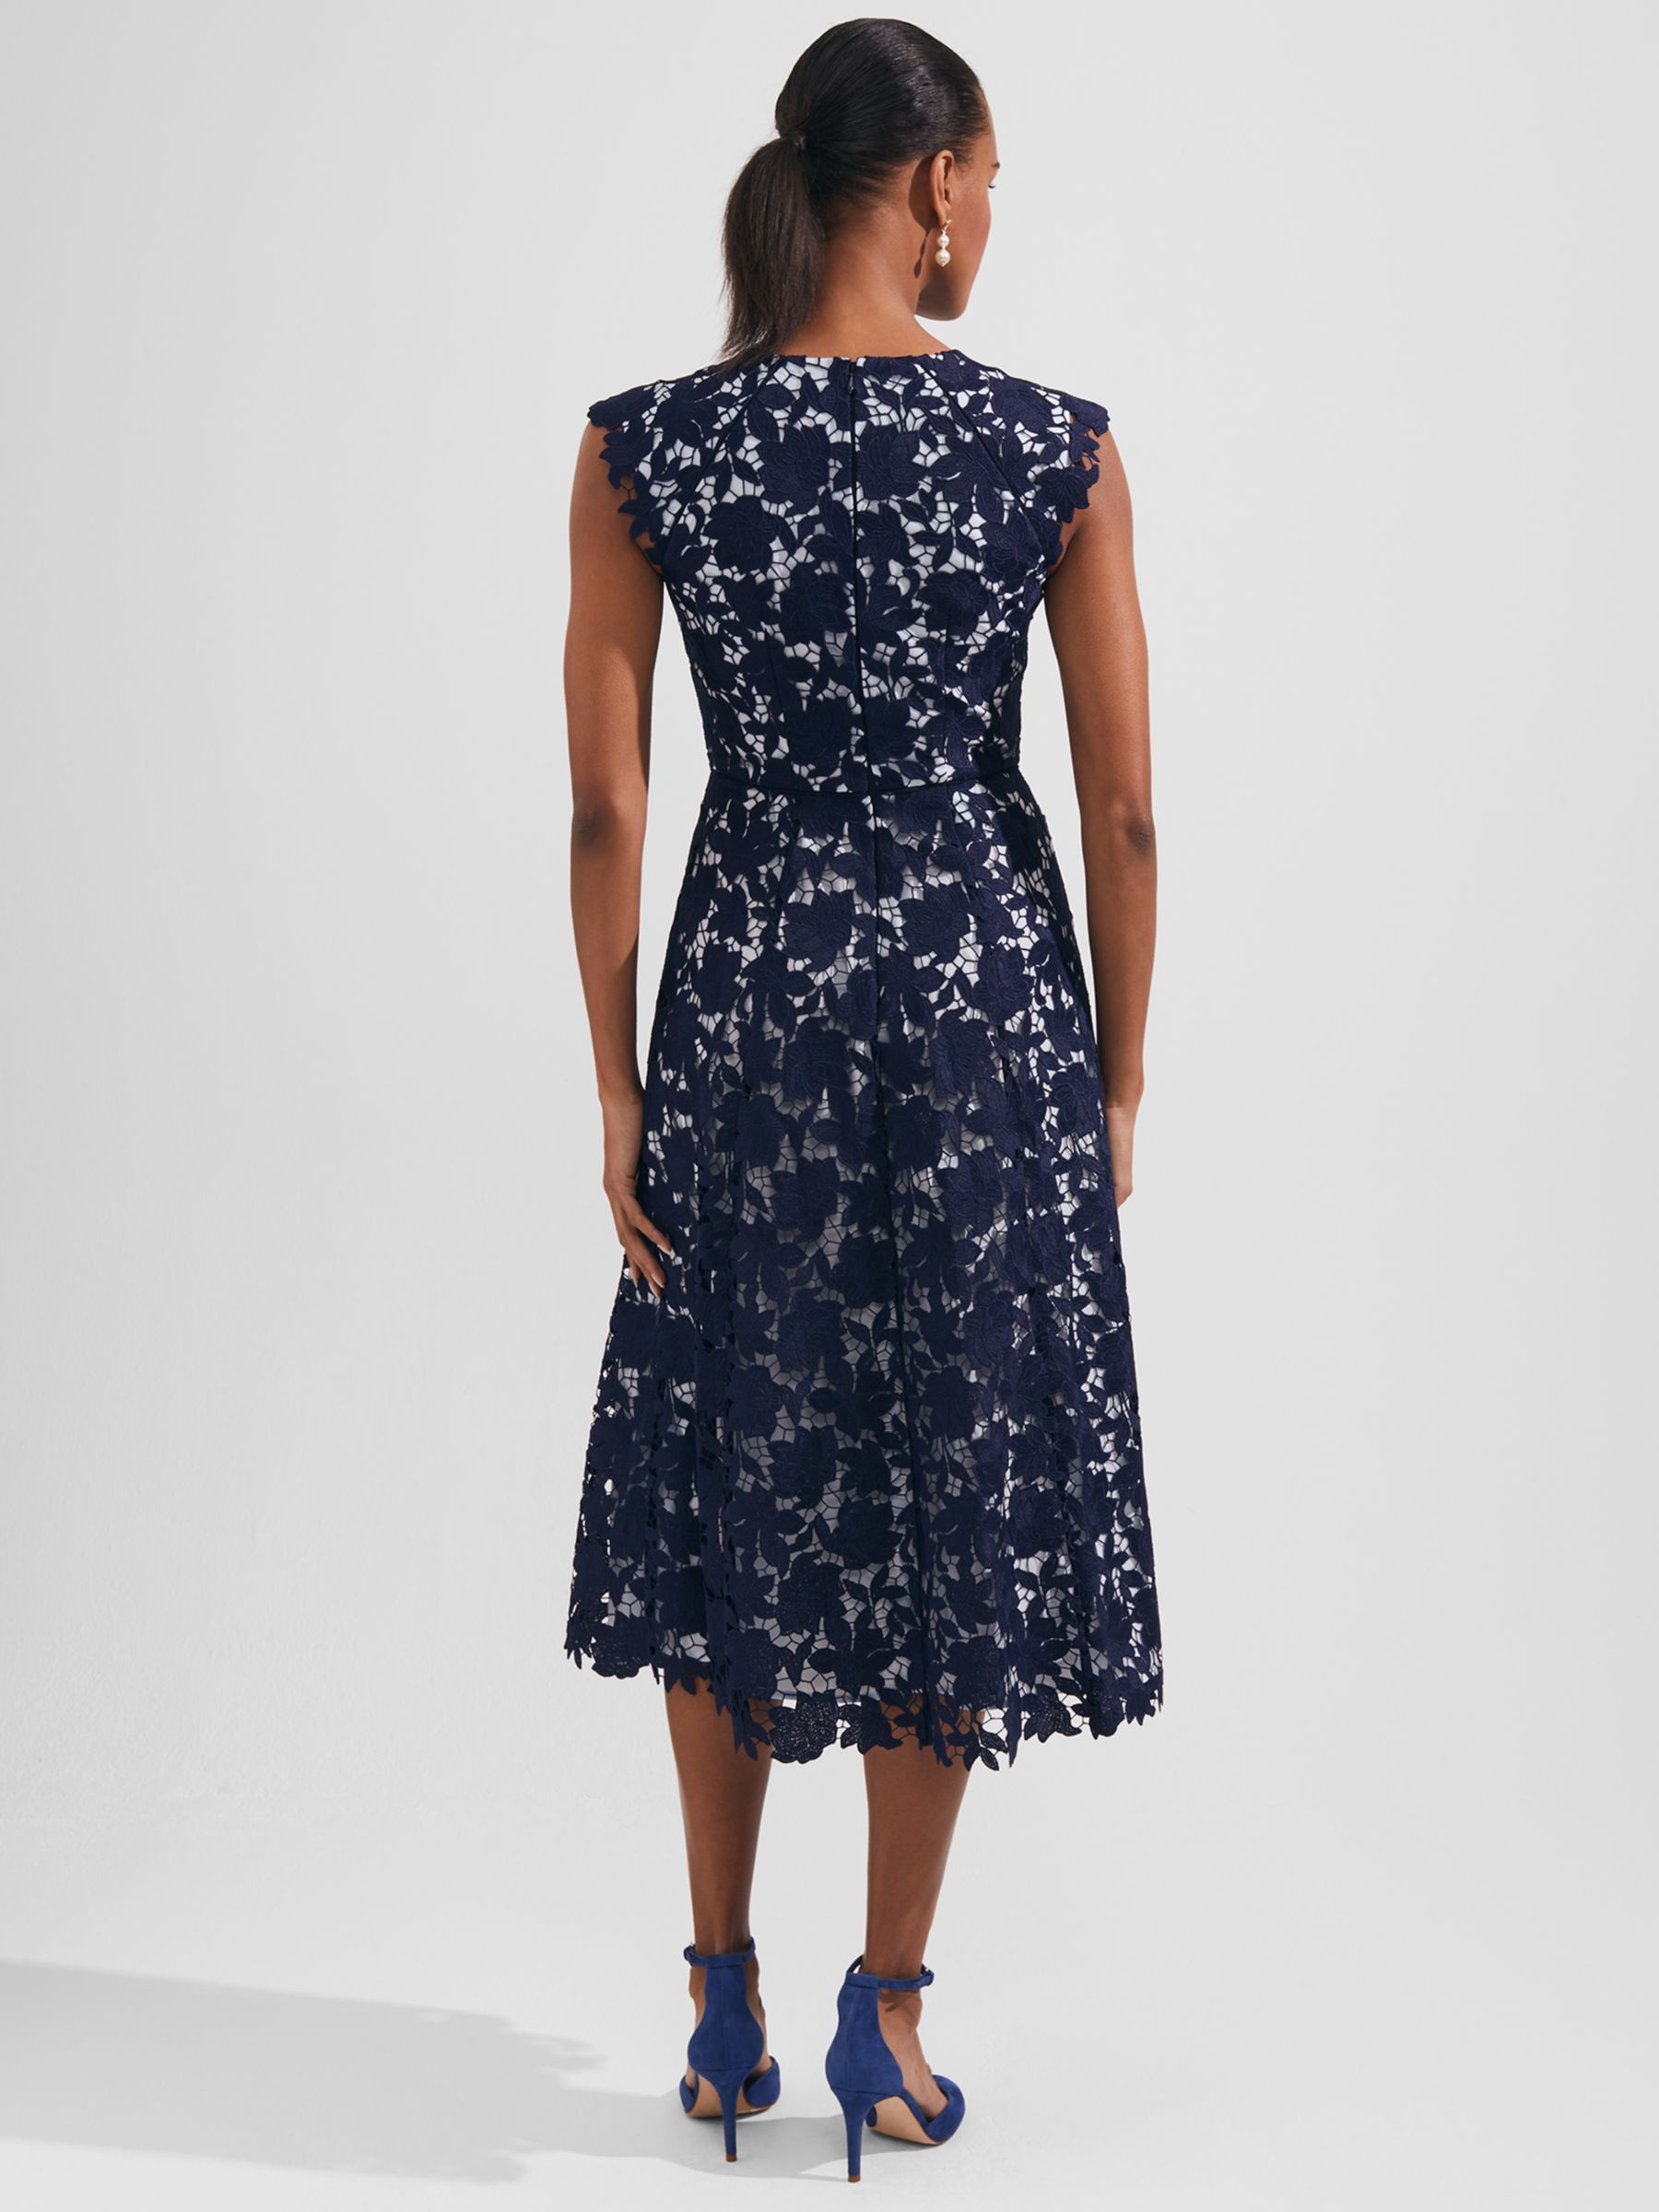 Hobbs Pheobe Midi Lace Dress, Pale Blue/Navy at John Lewis & Partners